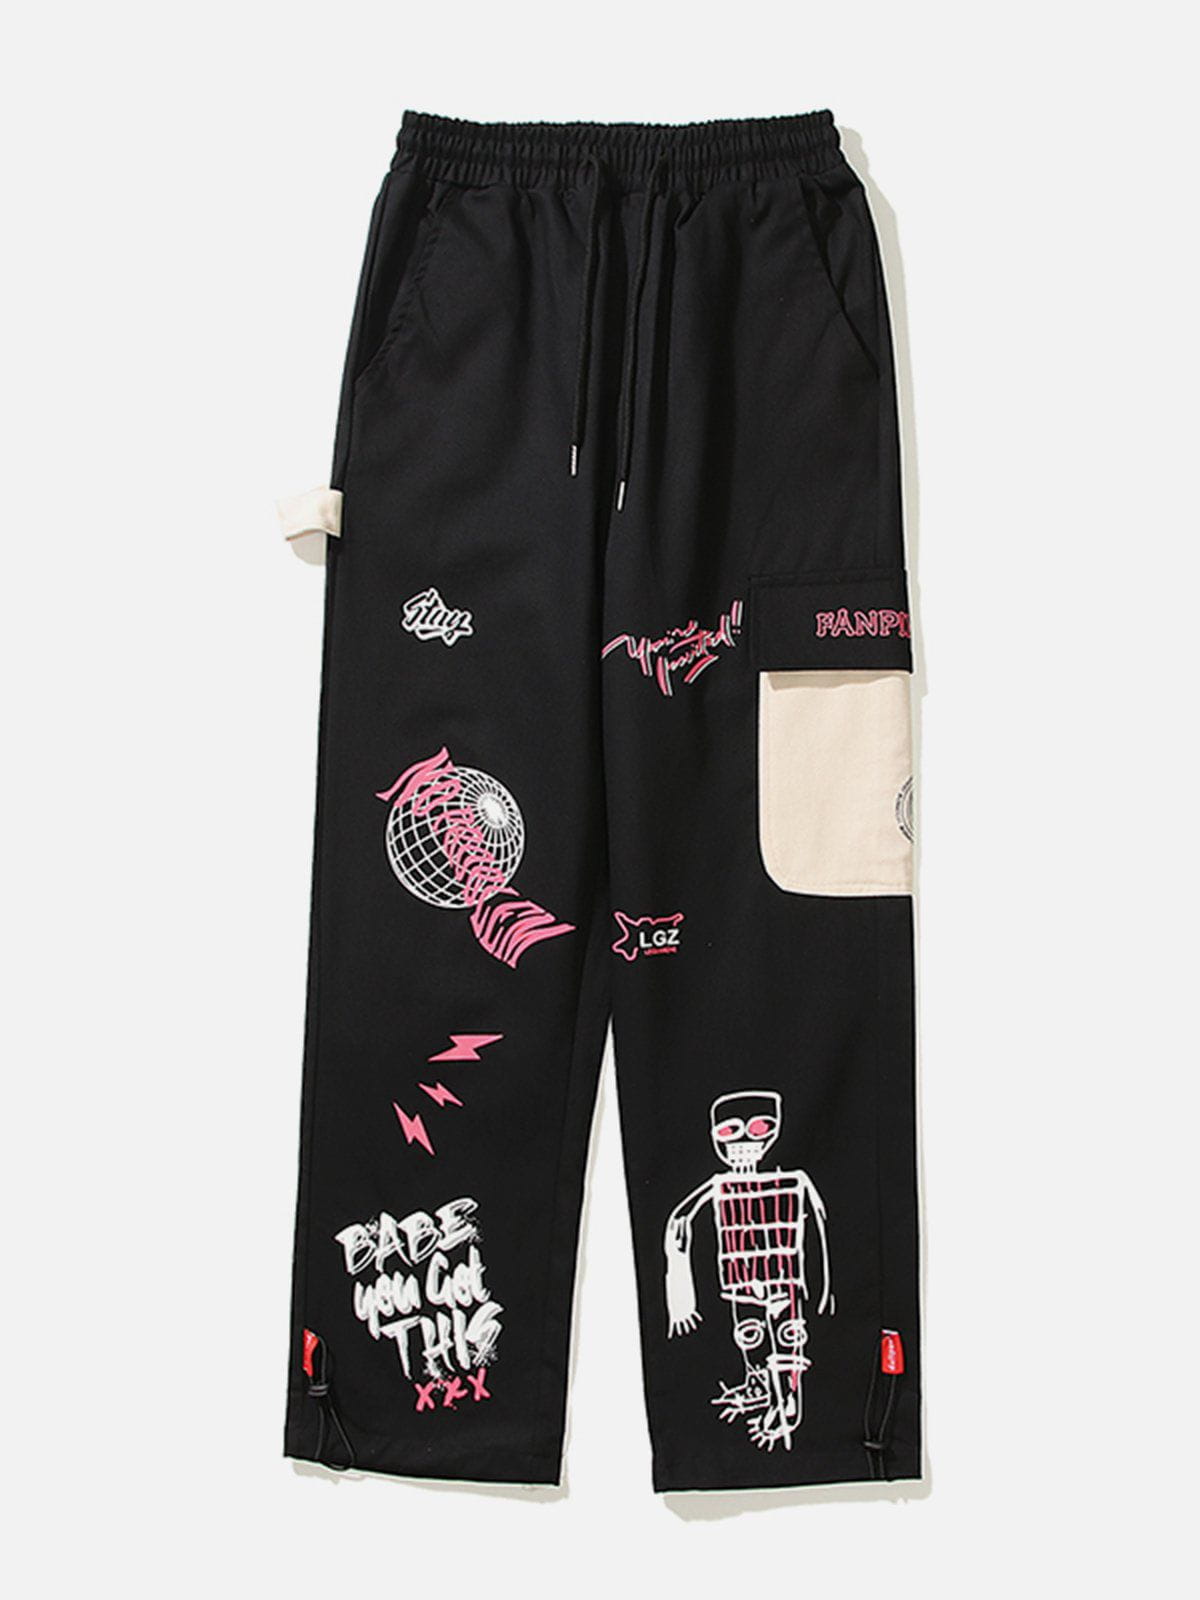 Sneakerland® - Graffiti Foam Print Cargo Pants